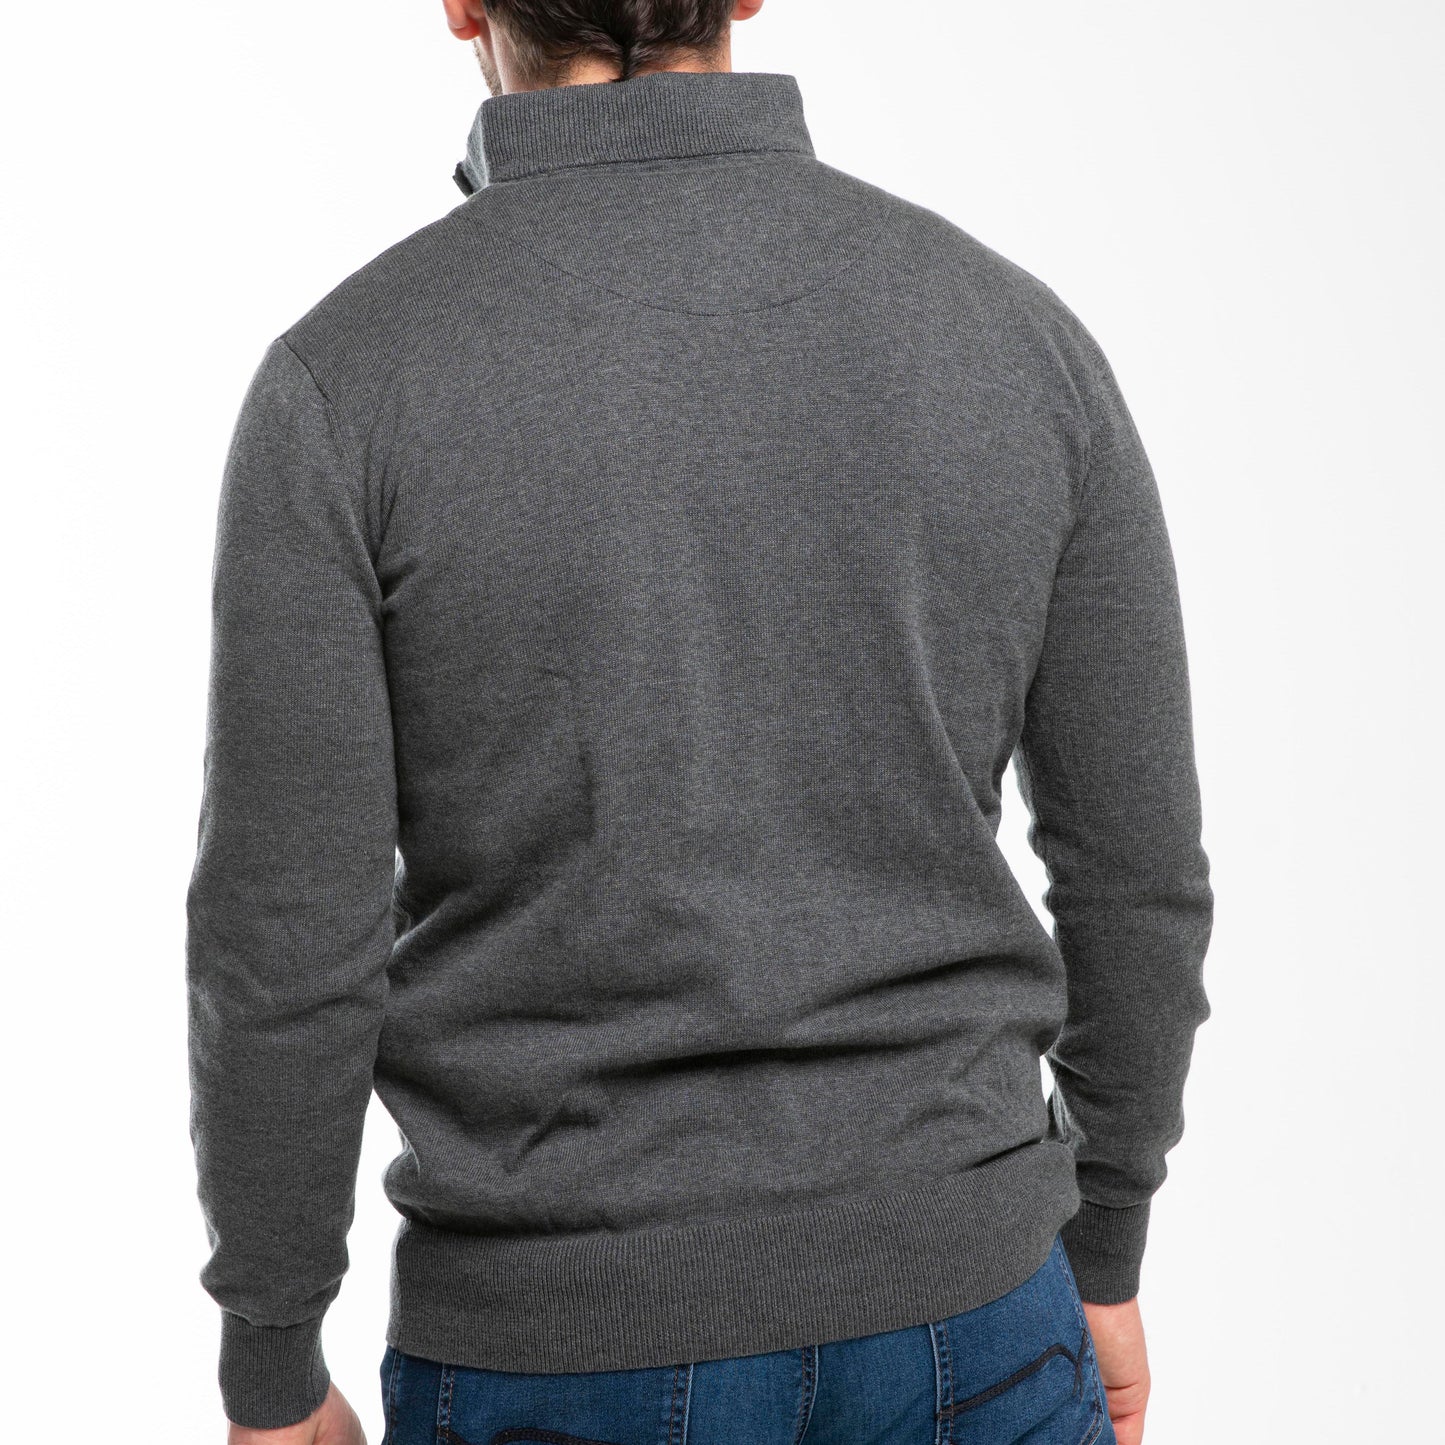 Half-Zip Grey Sweater with Blue Collar